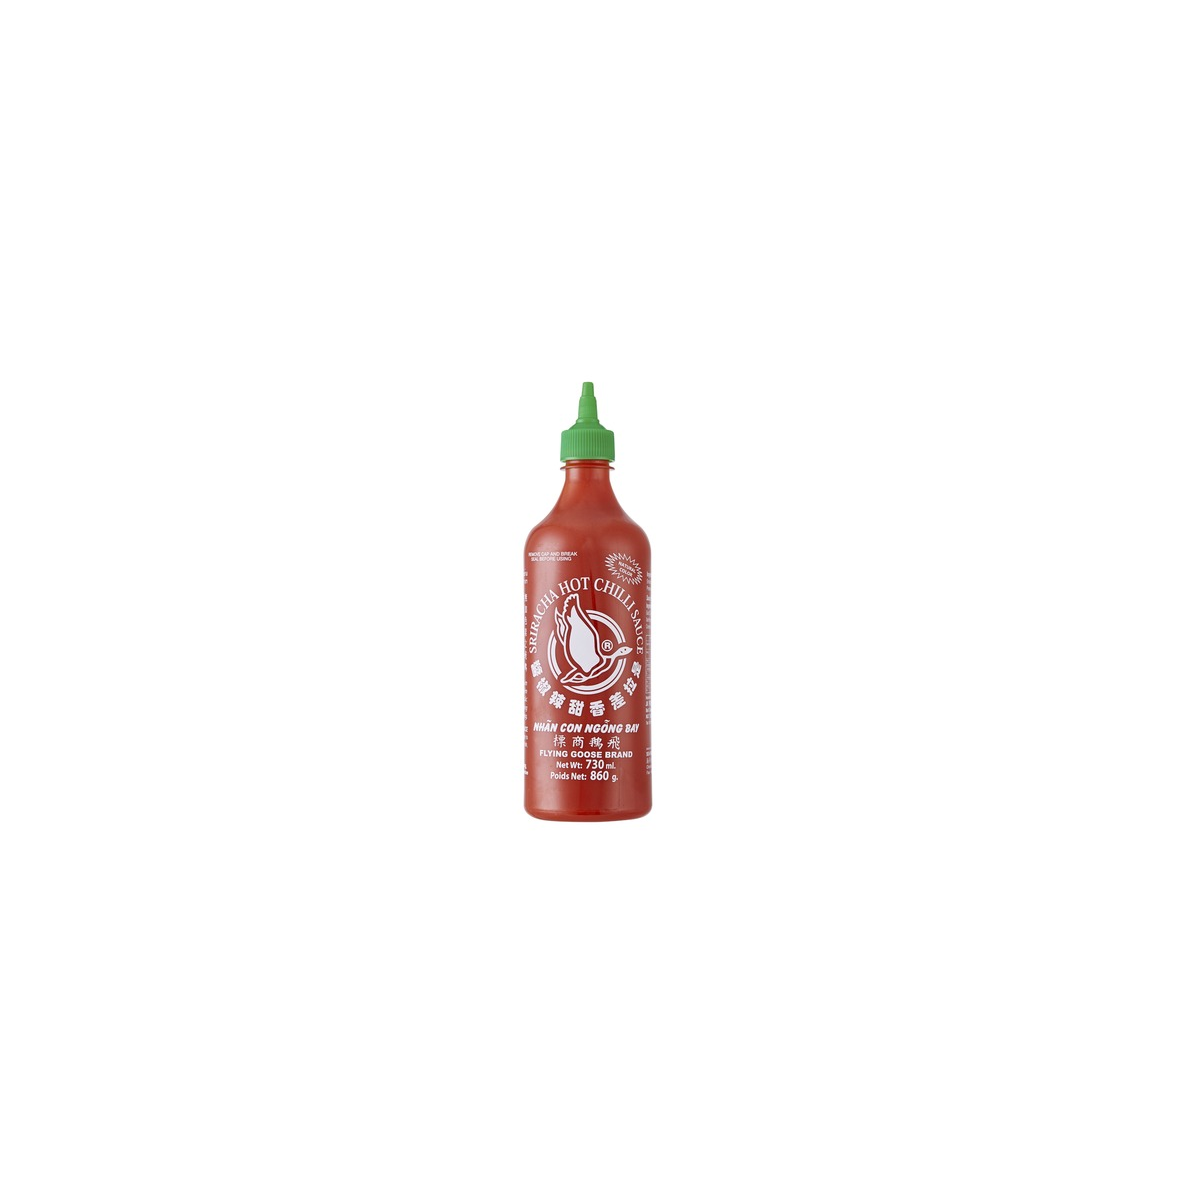 Sriracha Chilli Sauce 730ml - Flying Goose